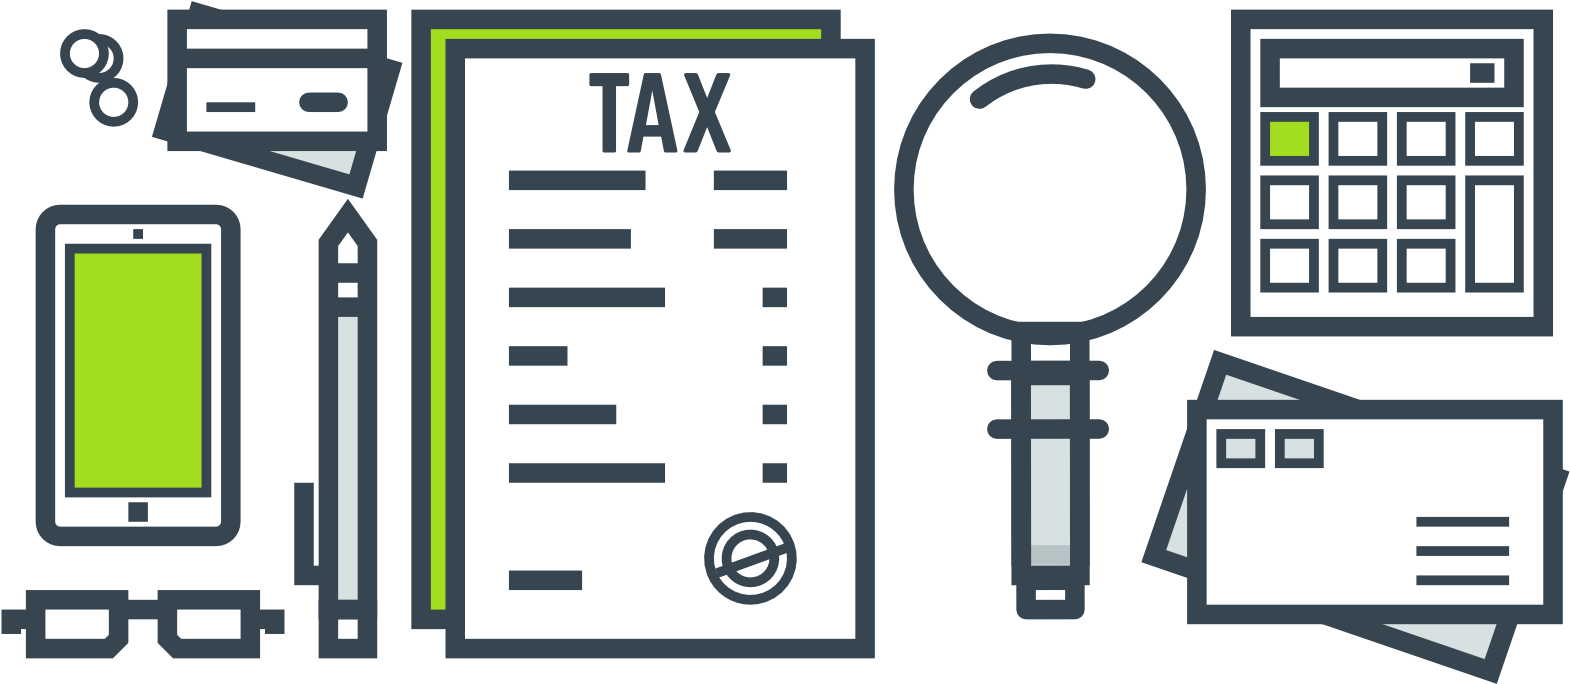 Tax Preparation Checklist Vector